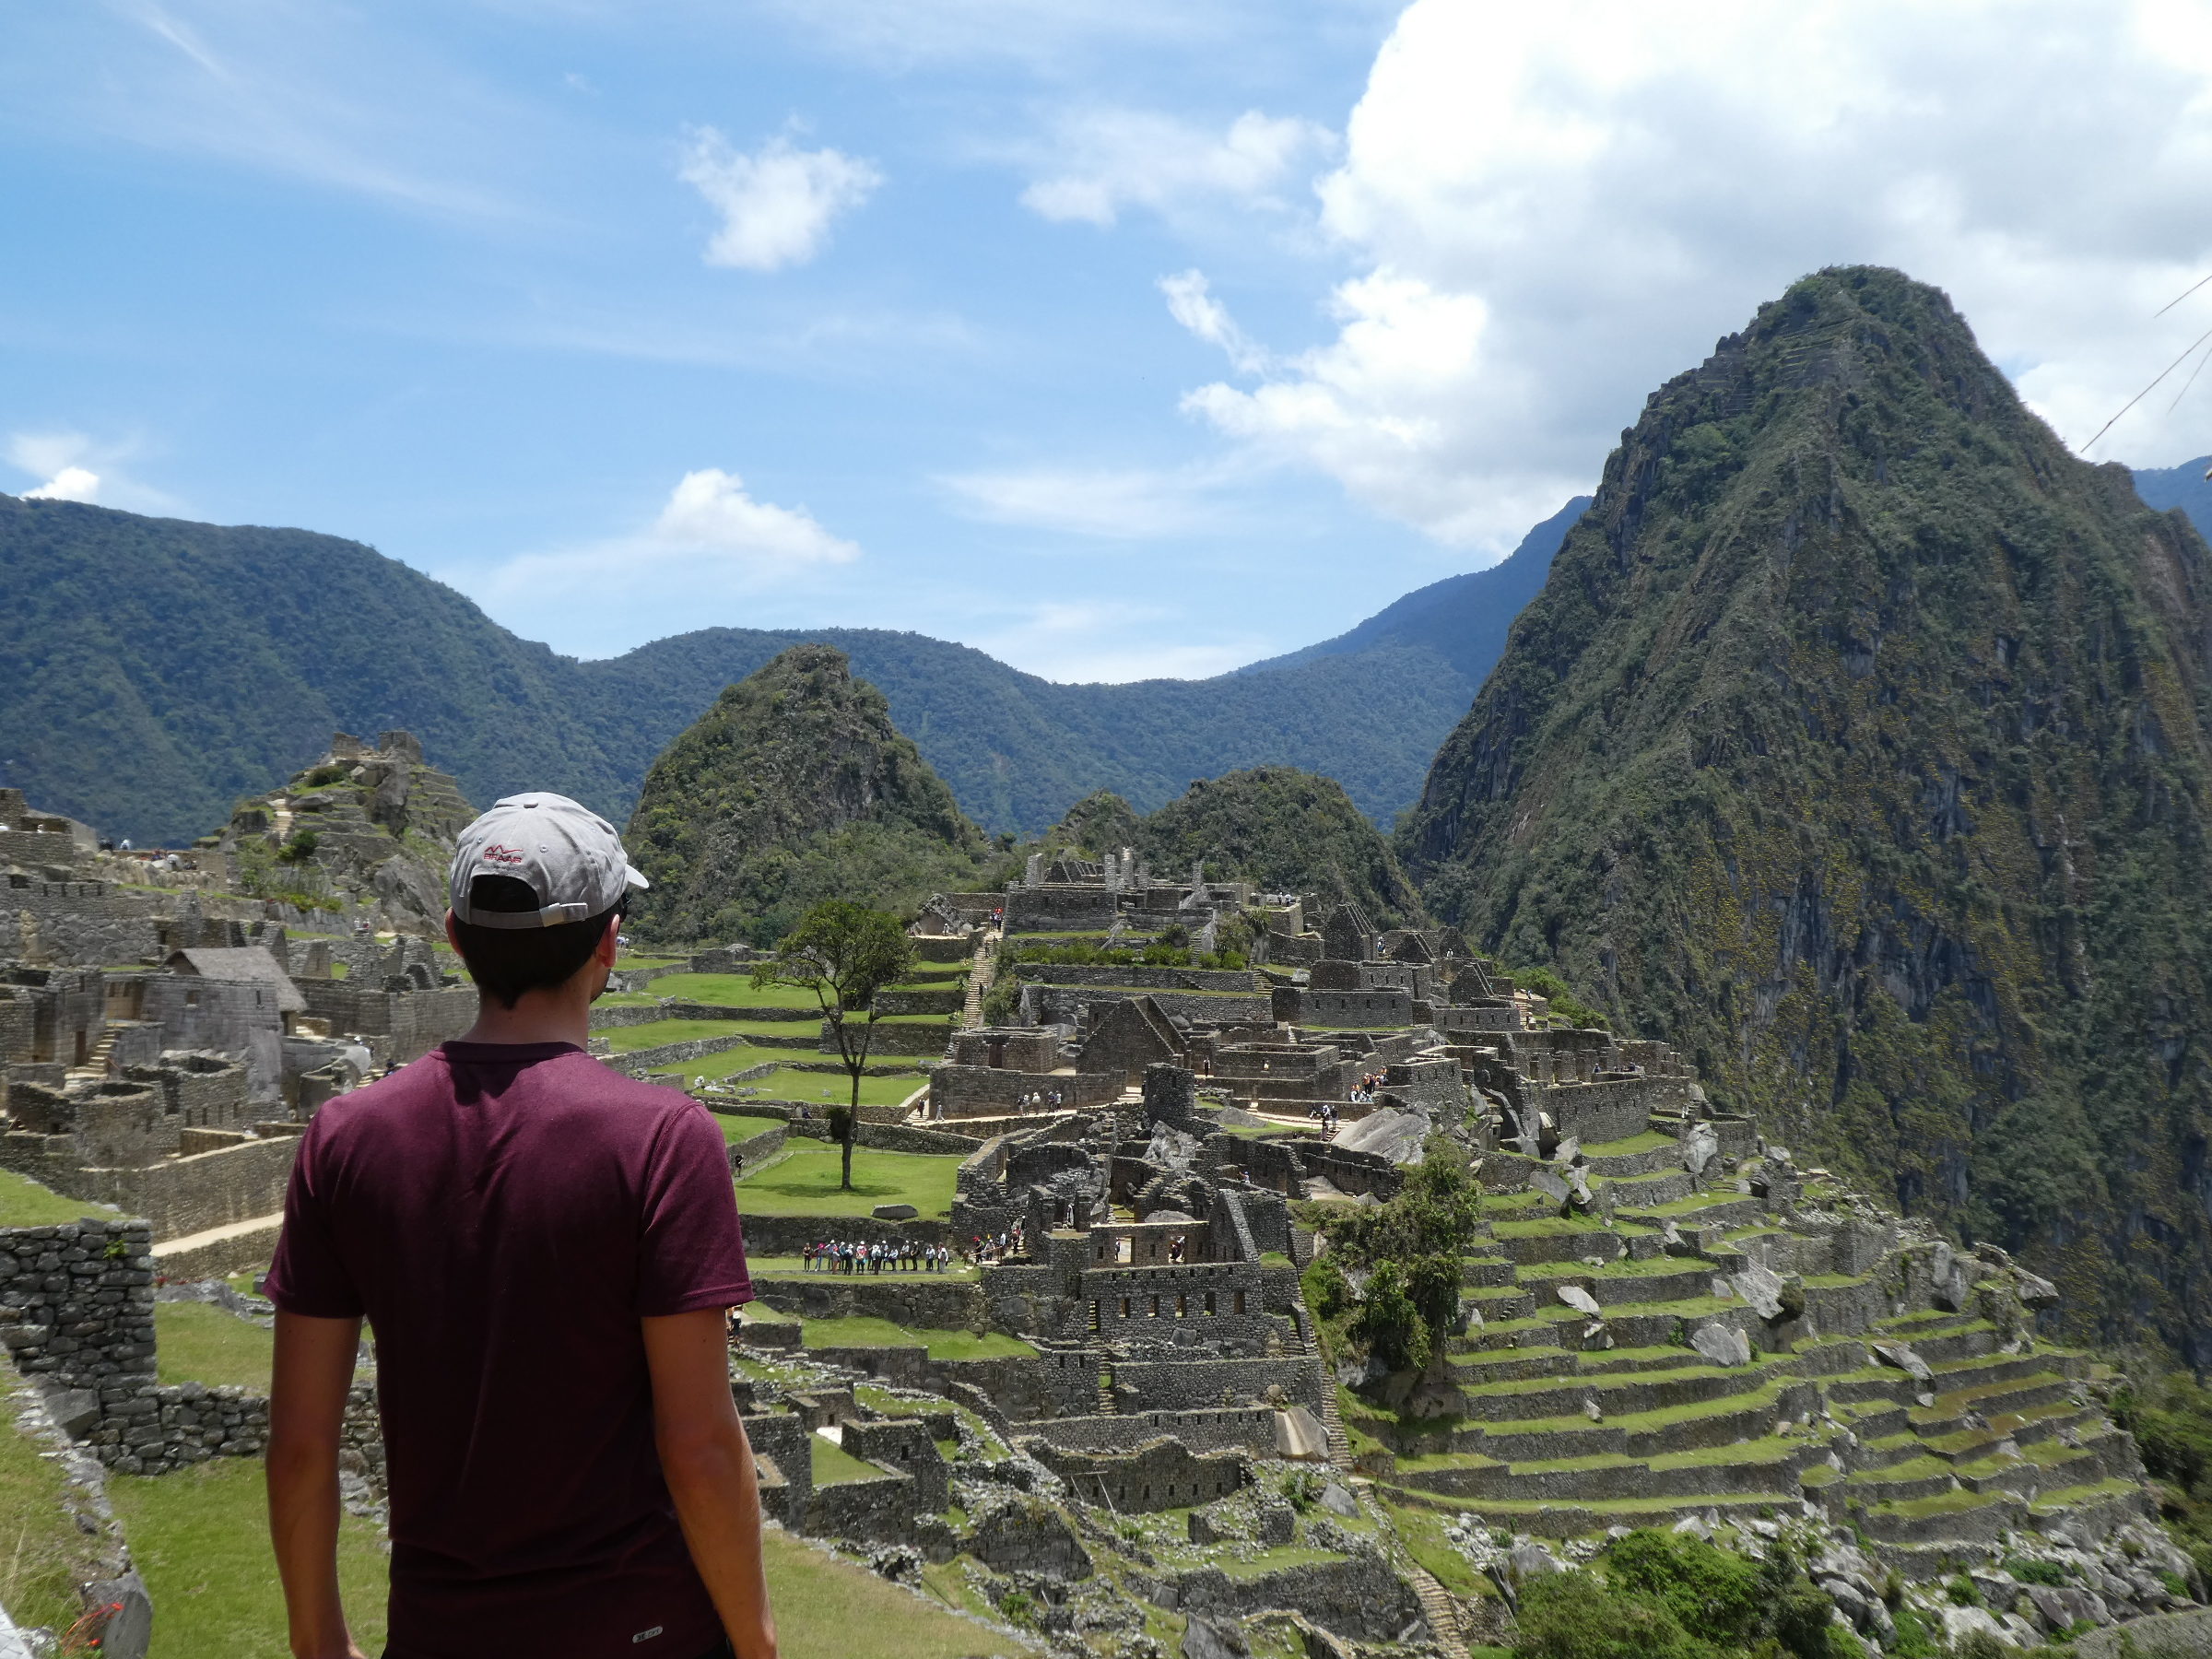 Ryne overlooking Machu Picchu by hesaidorshesaid